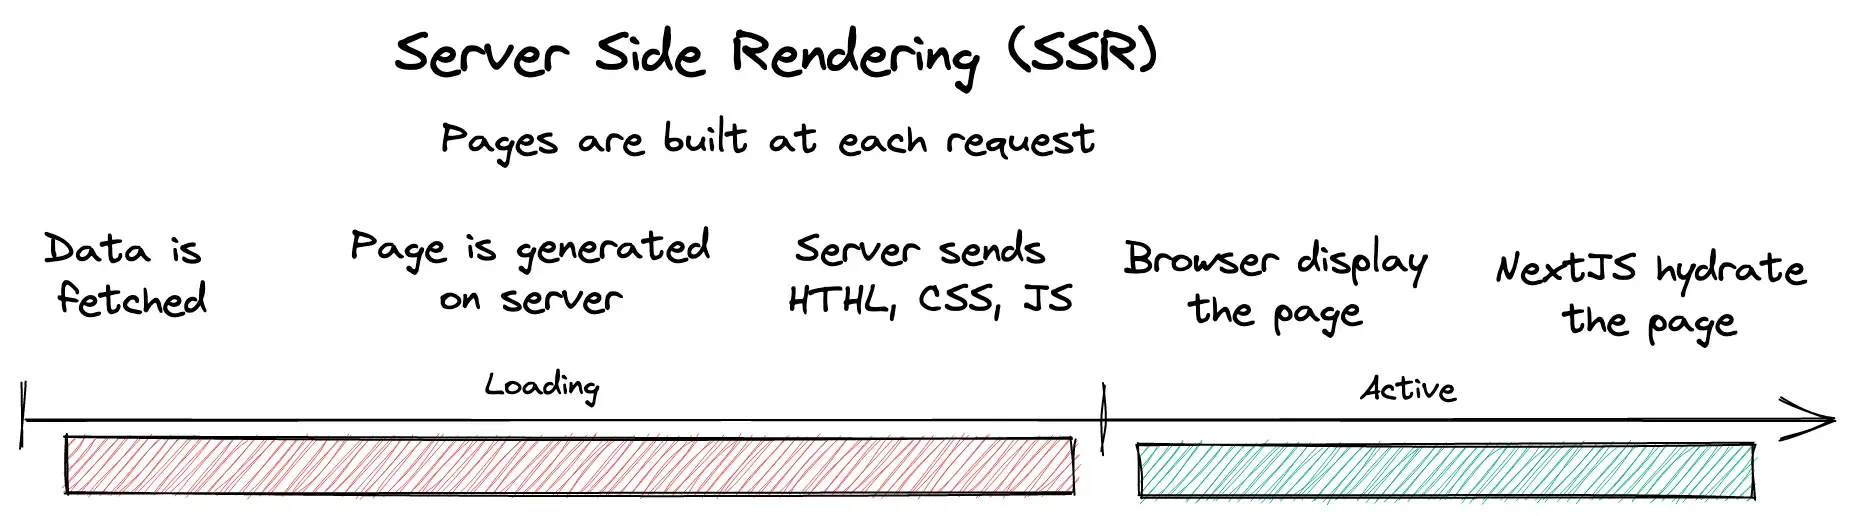 Server side renderin on NextJS